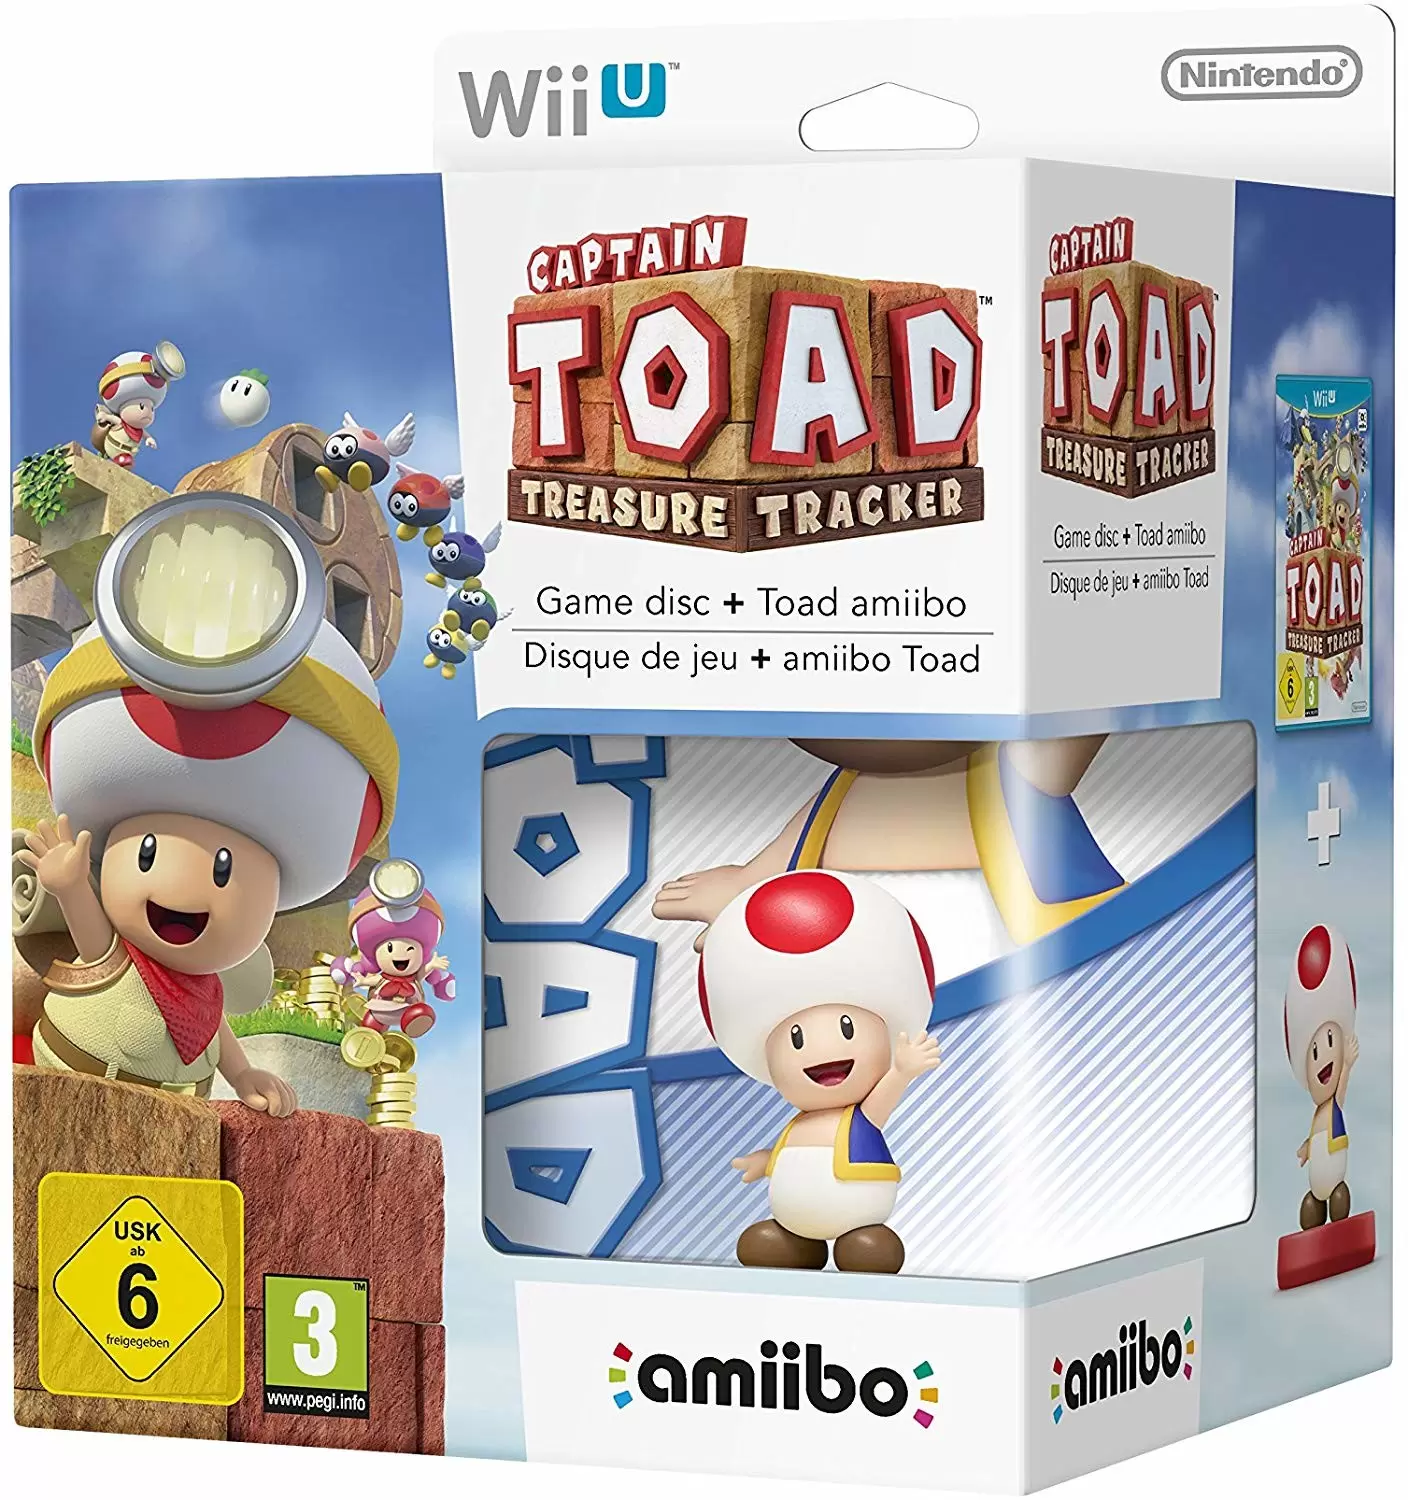 Wii U Games - Captain Toad Treasure Tracker